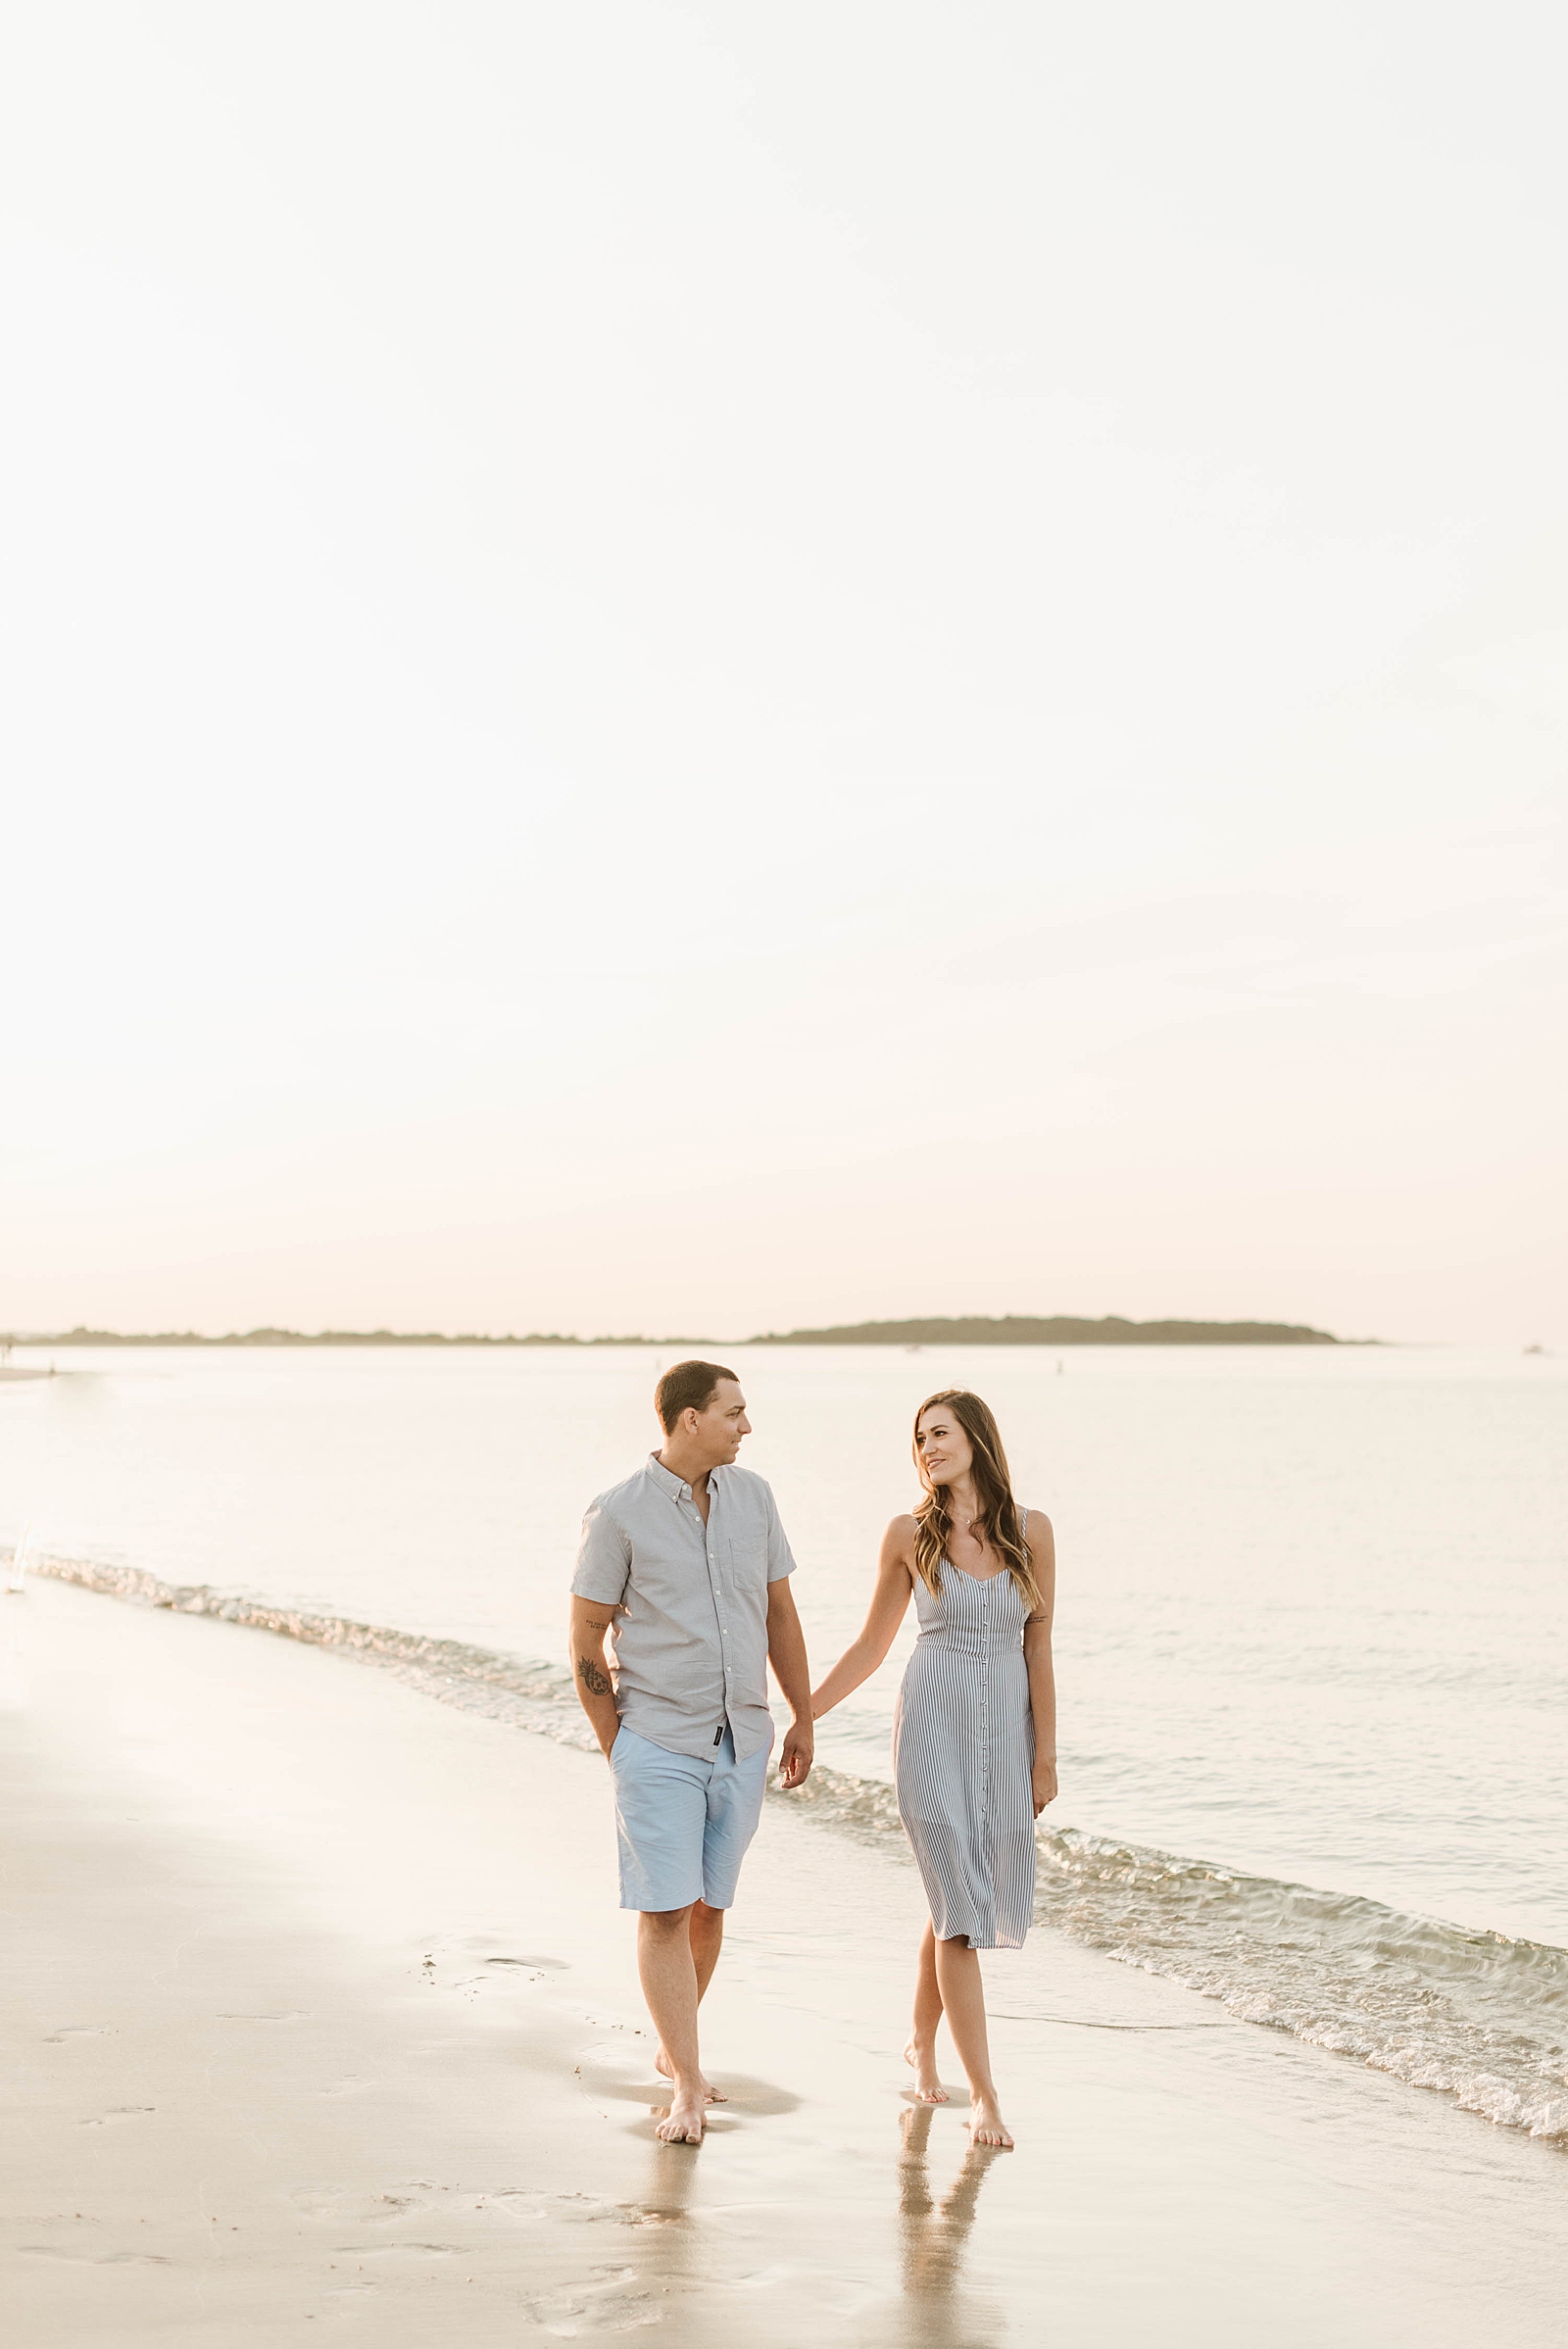 Summer Crane Beach Engagement Session by Boston Wedding Photographer Annmarie Swift